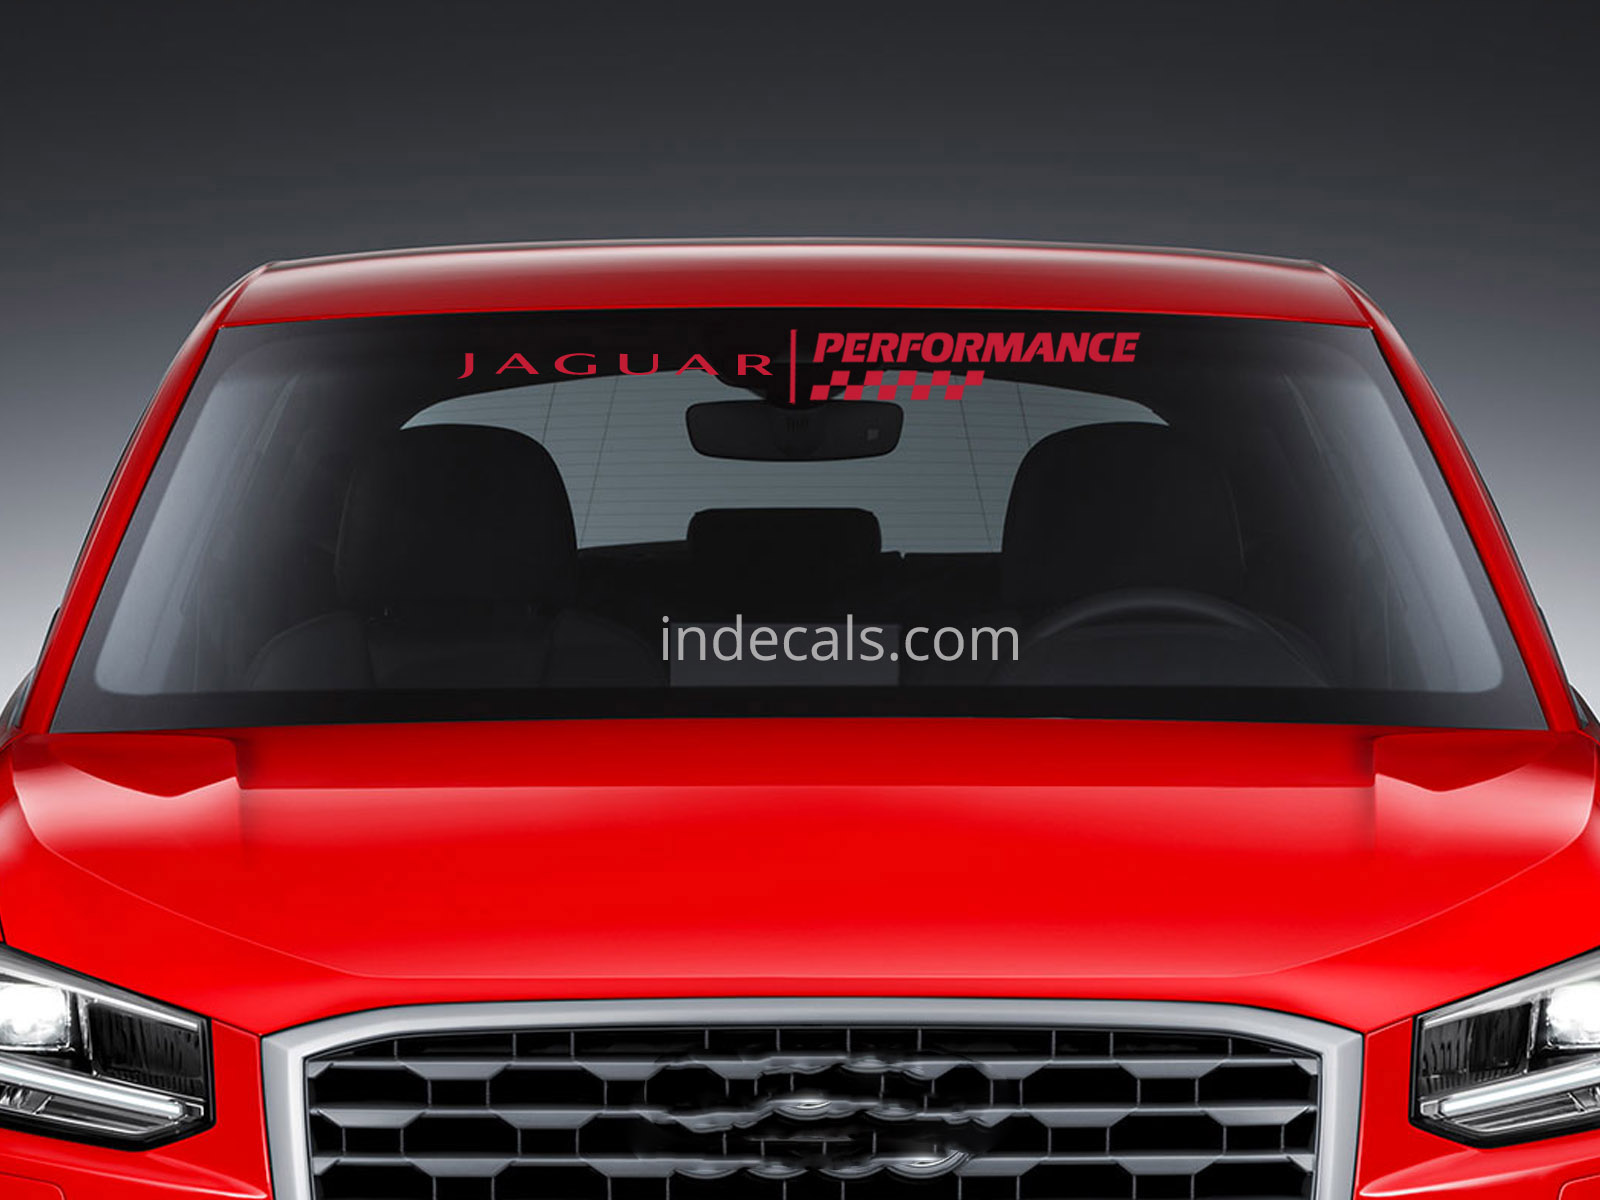 1 x Jaguar Performance Sticker for Windshield or Back Window - Red